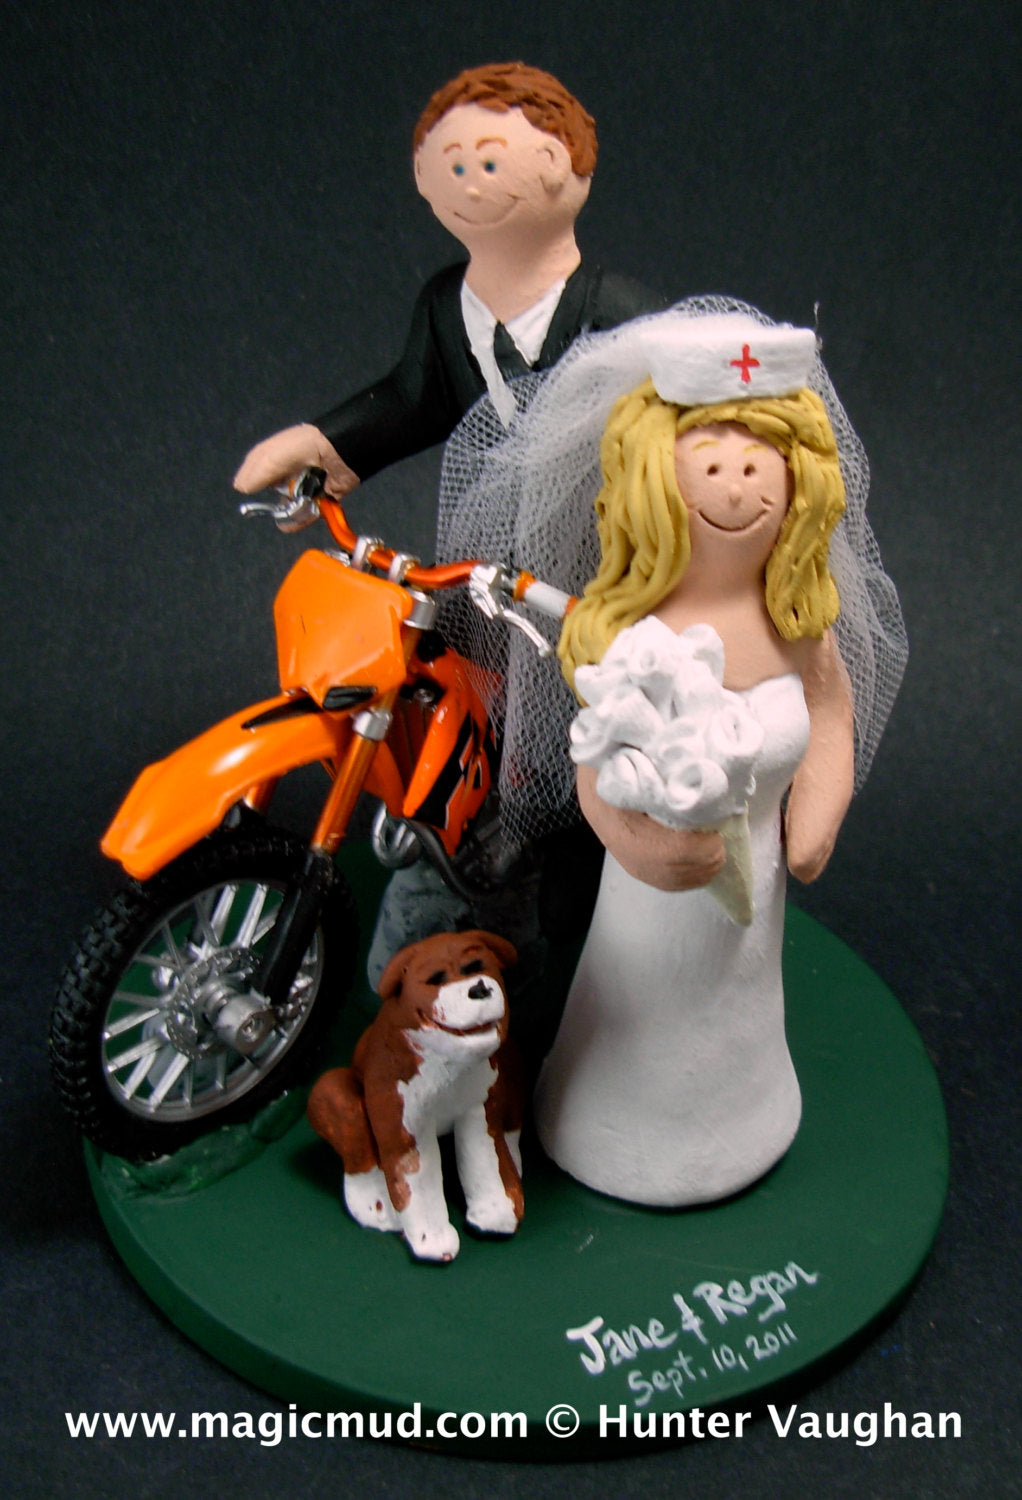 KTM Wedding Cake Topper, Dirt Bike Motorcycle Wedding Cake Topper, Off Road Motorcycle Wedding Cake Topper, Motorcycle Wedding Cake Topper - iWeddingCakeToppers